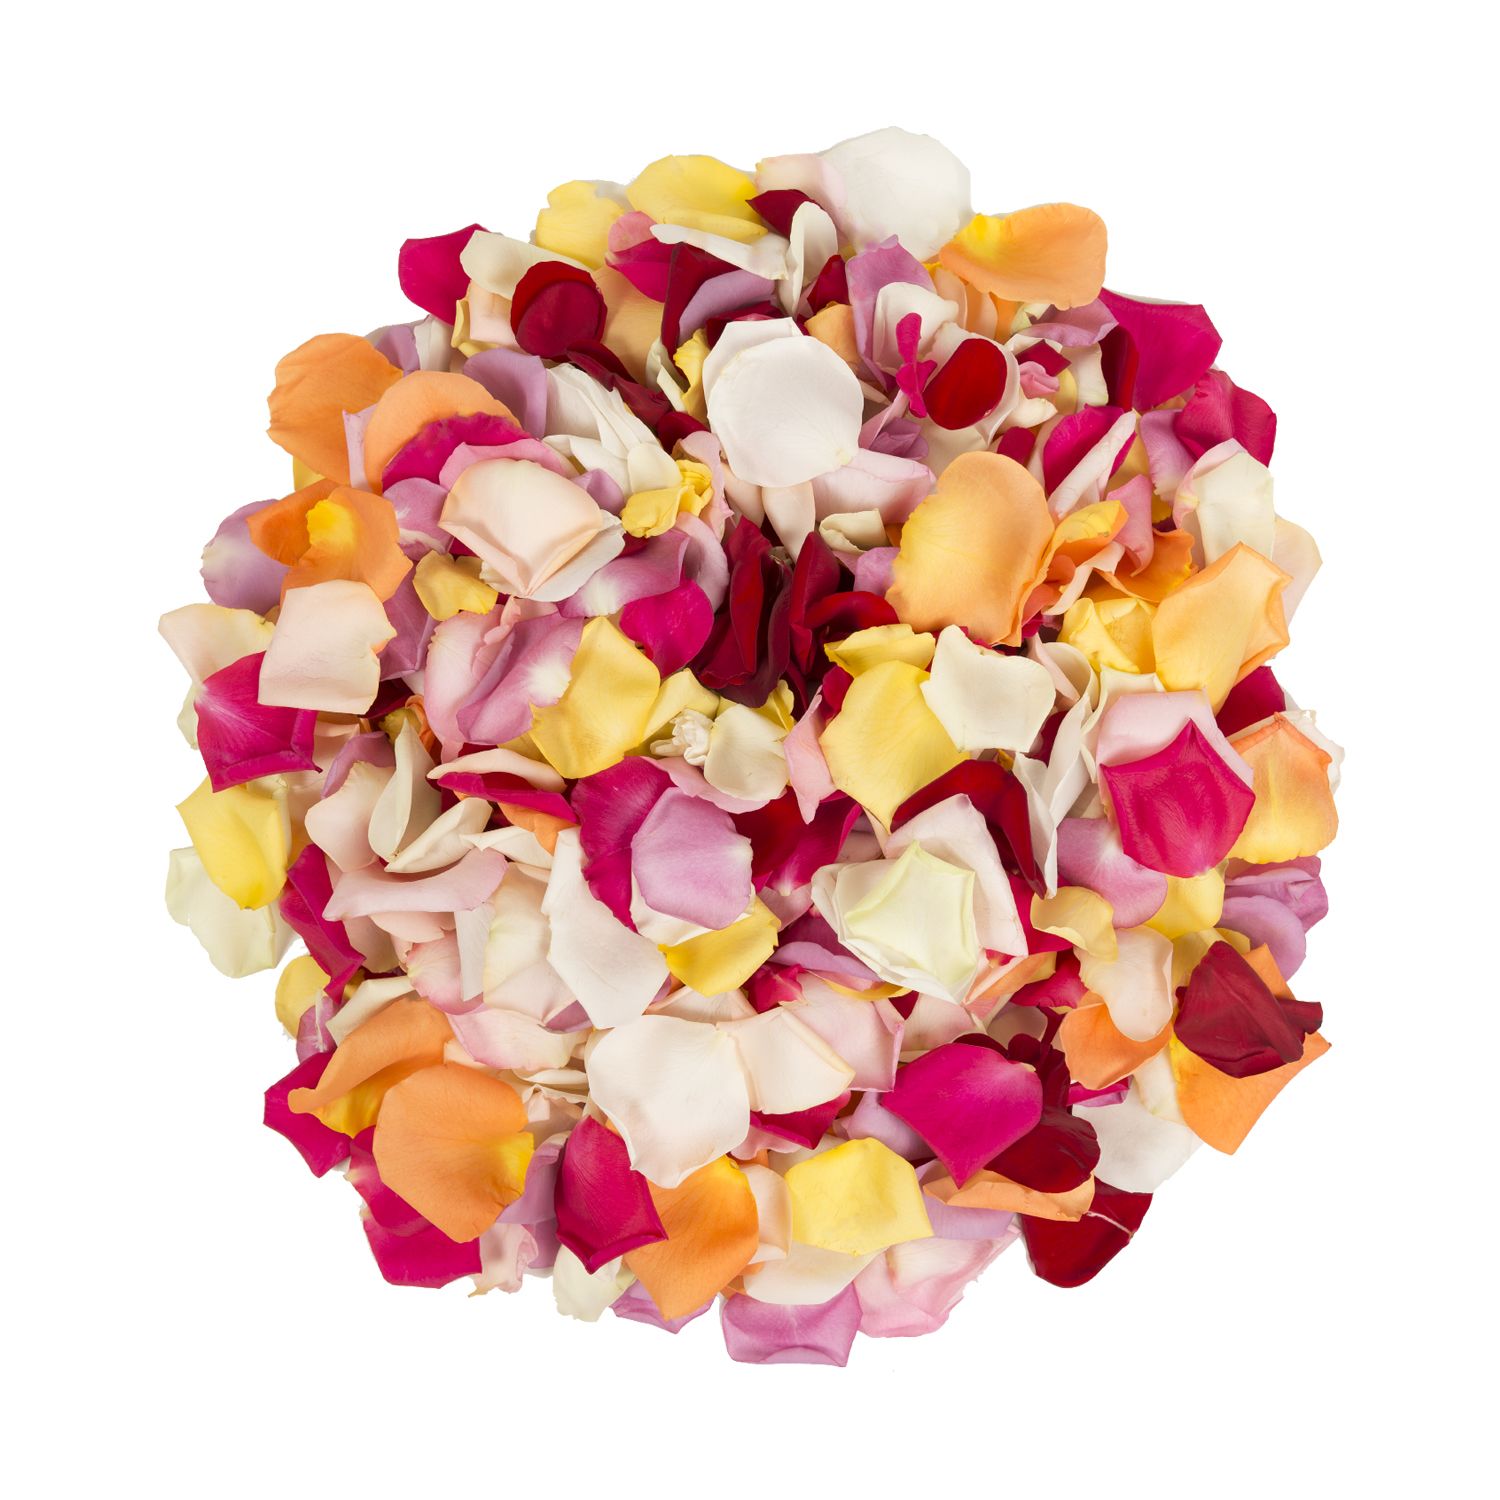 5,000 Rose Petals - Rainbow